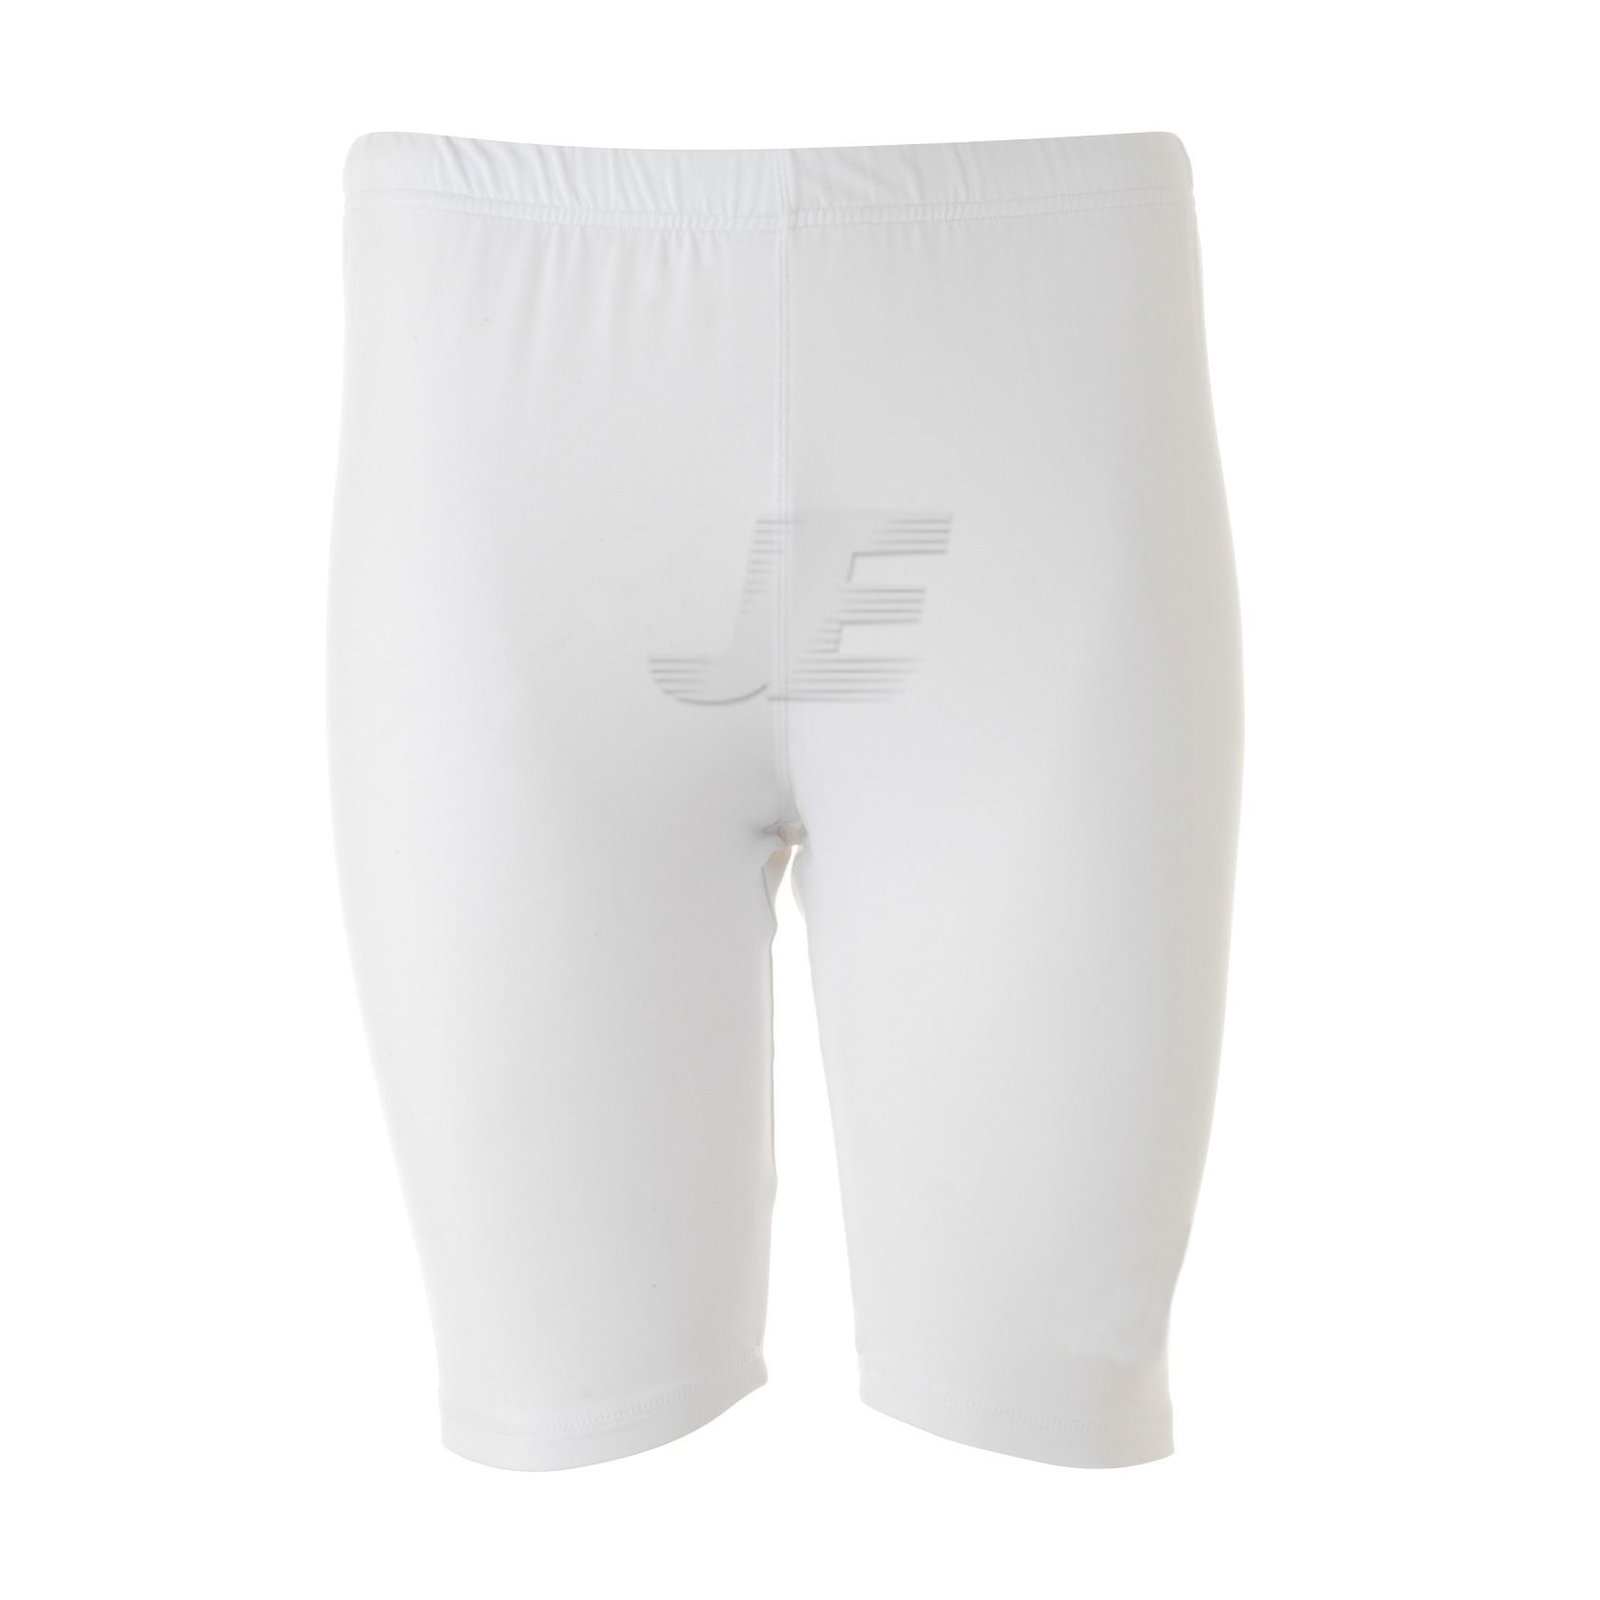 Mens Sports Base Layers White Long Length Compression Shorts